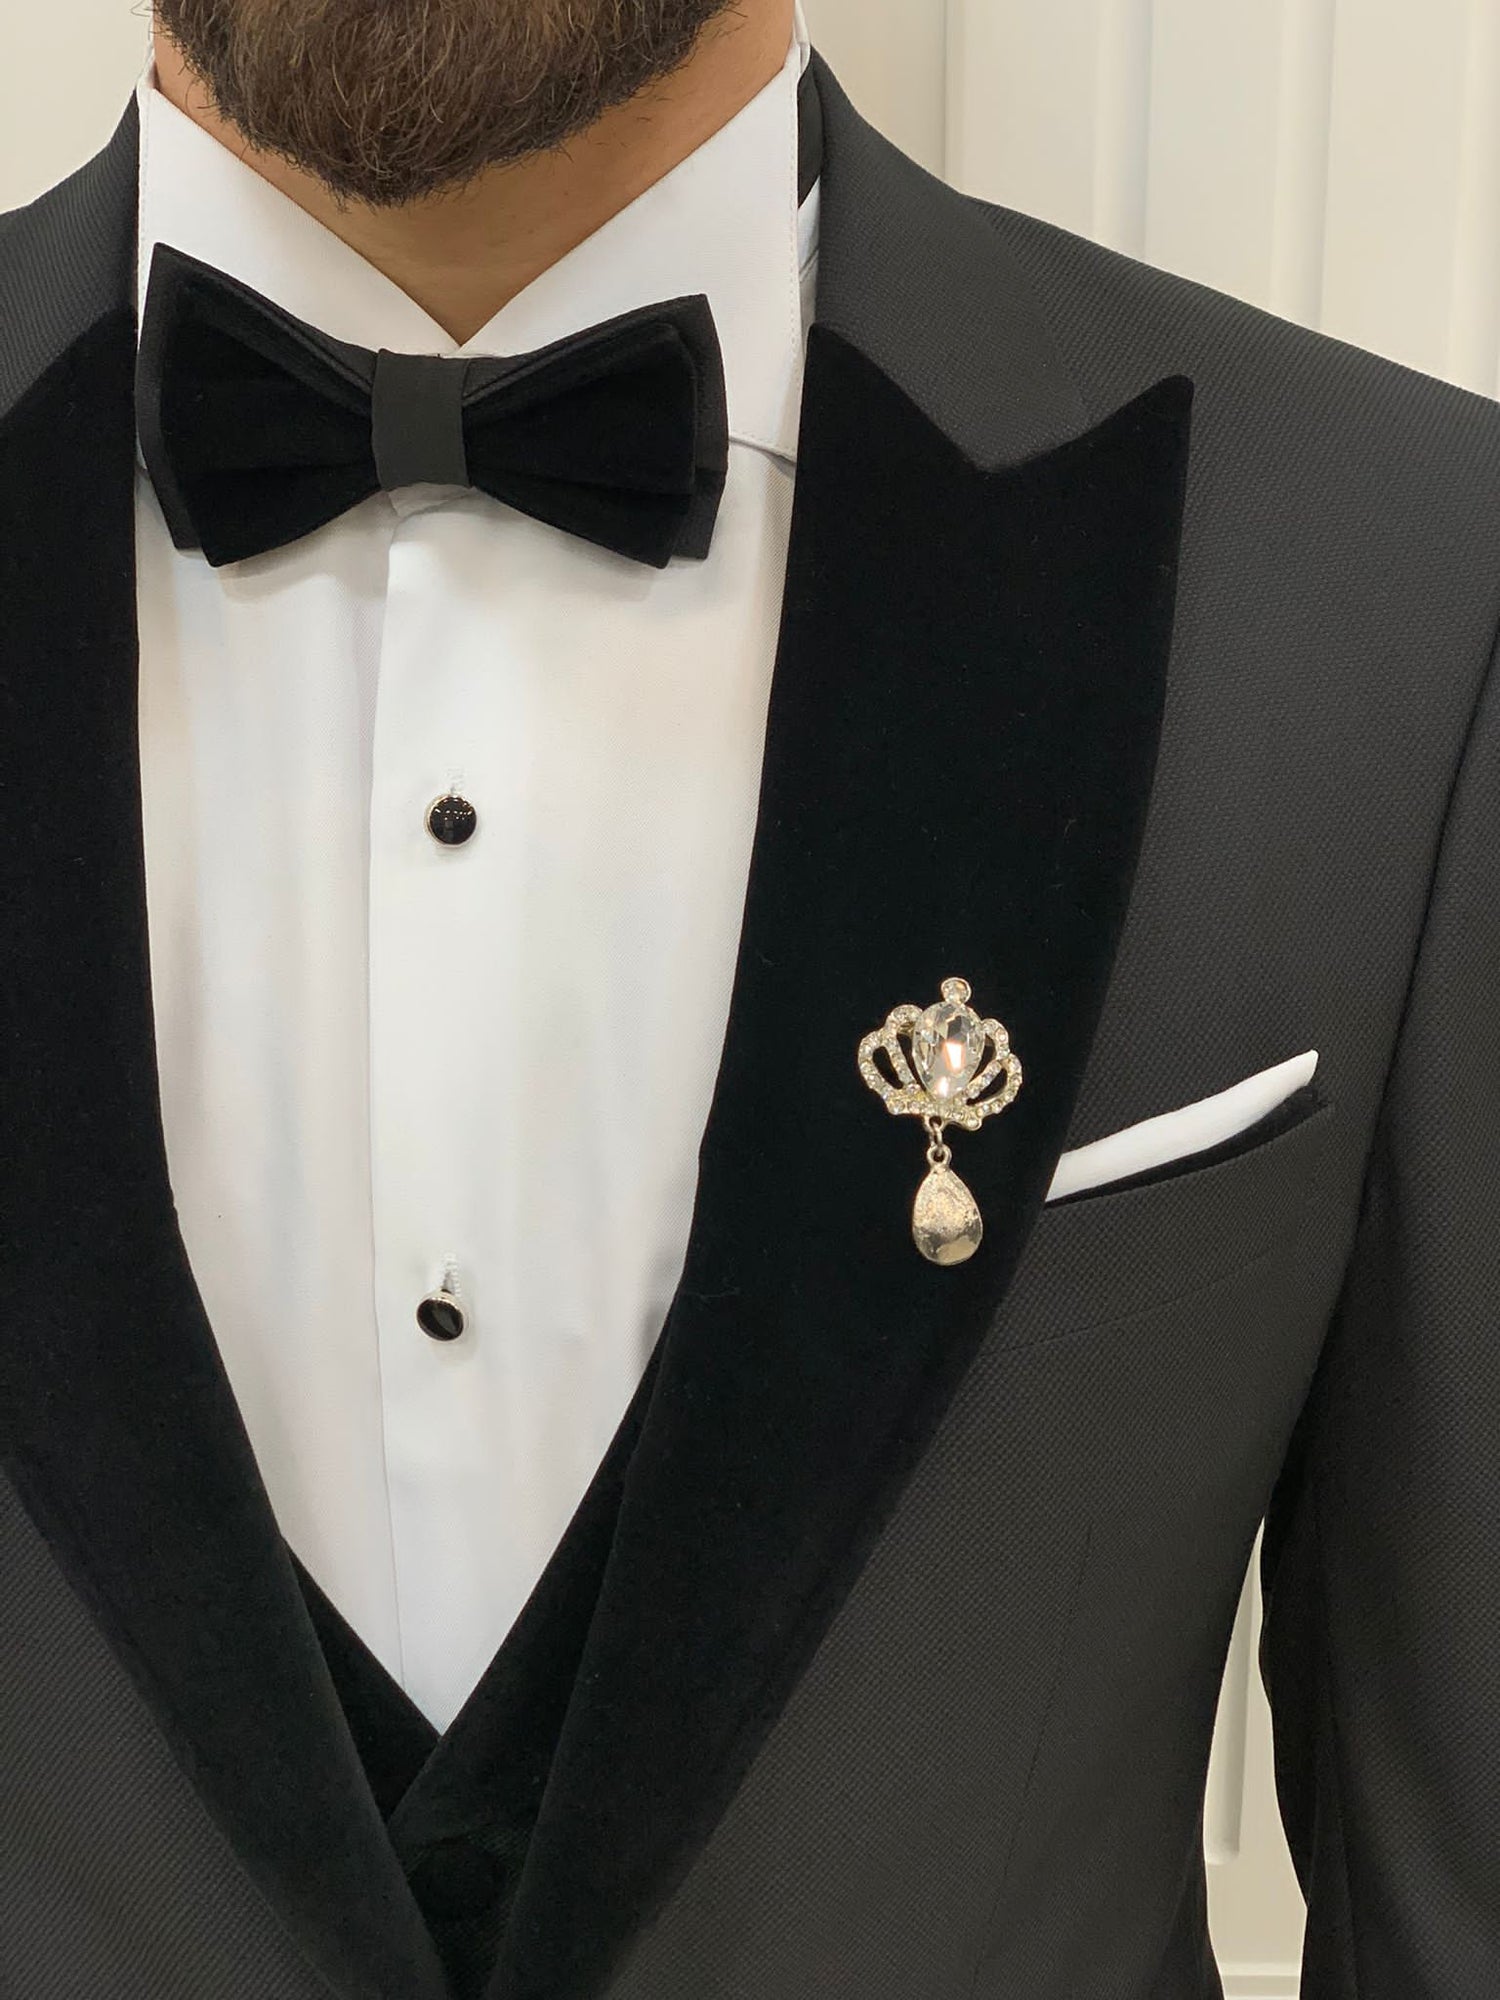 Model Wearing Black Tuxedo with Peak Lapel, Single Button, Slim-Fit Italian Cut at Formal Event